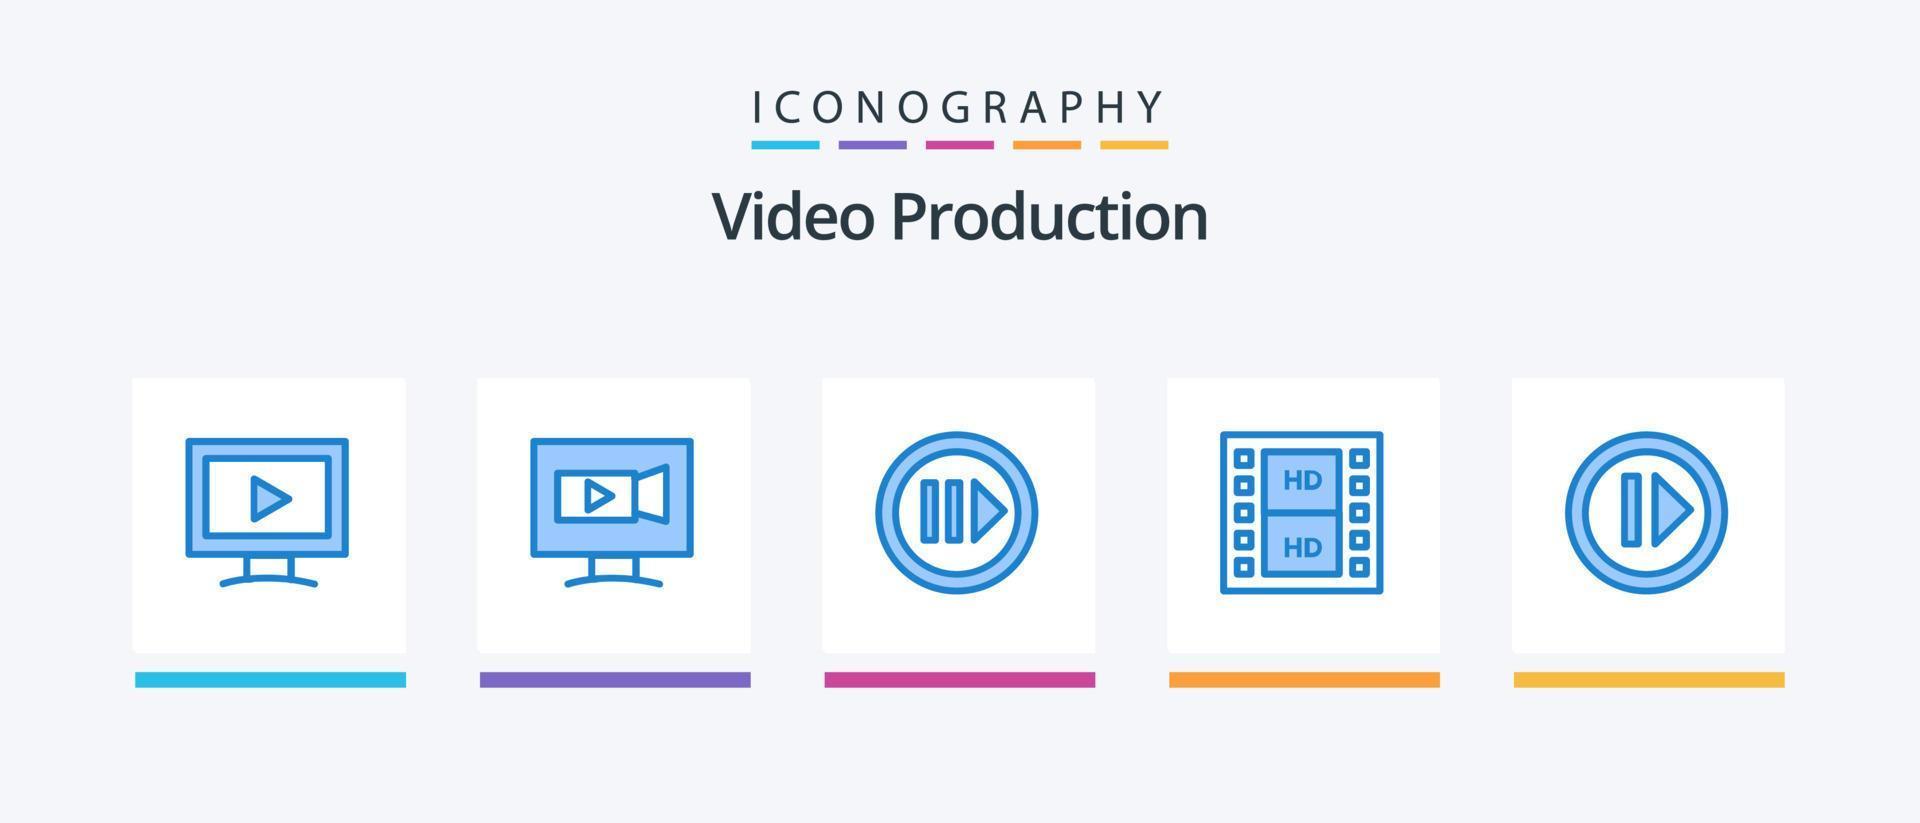 video produktion blå 5 ikon packa Inklusive fram. multimedia. media. film. filma. kreativ ikoner design vektor